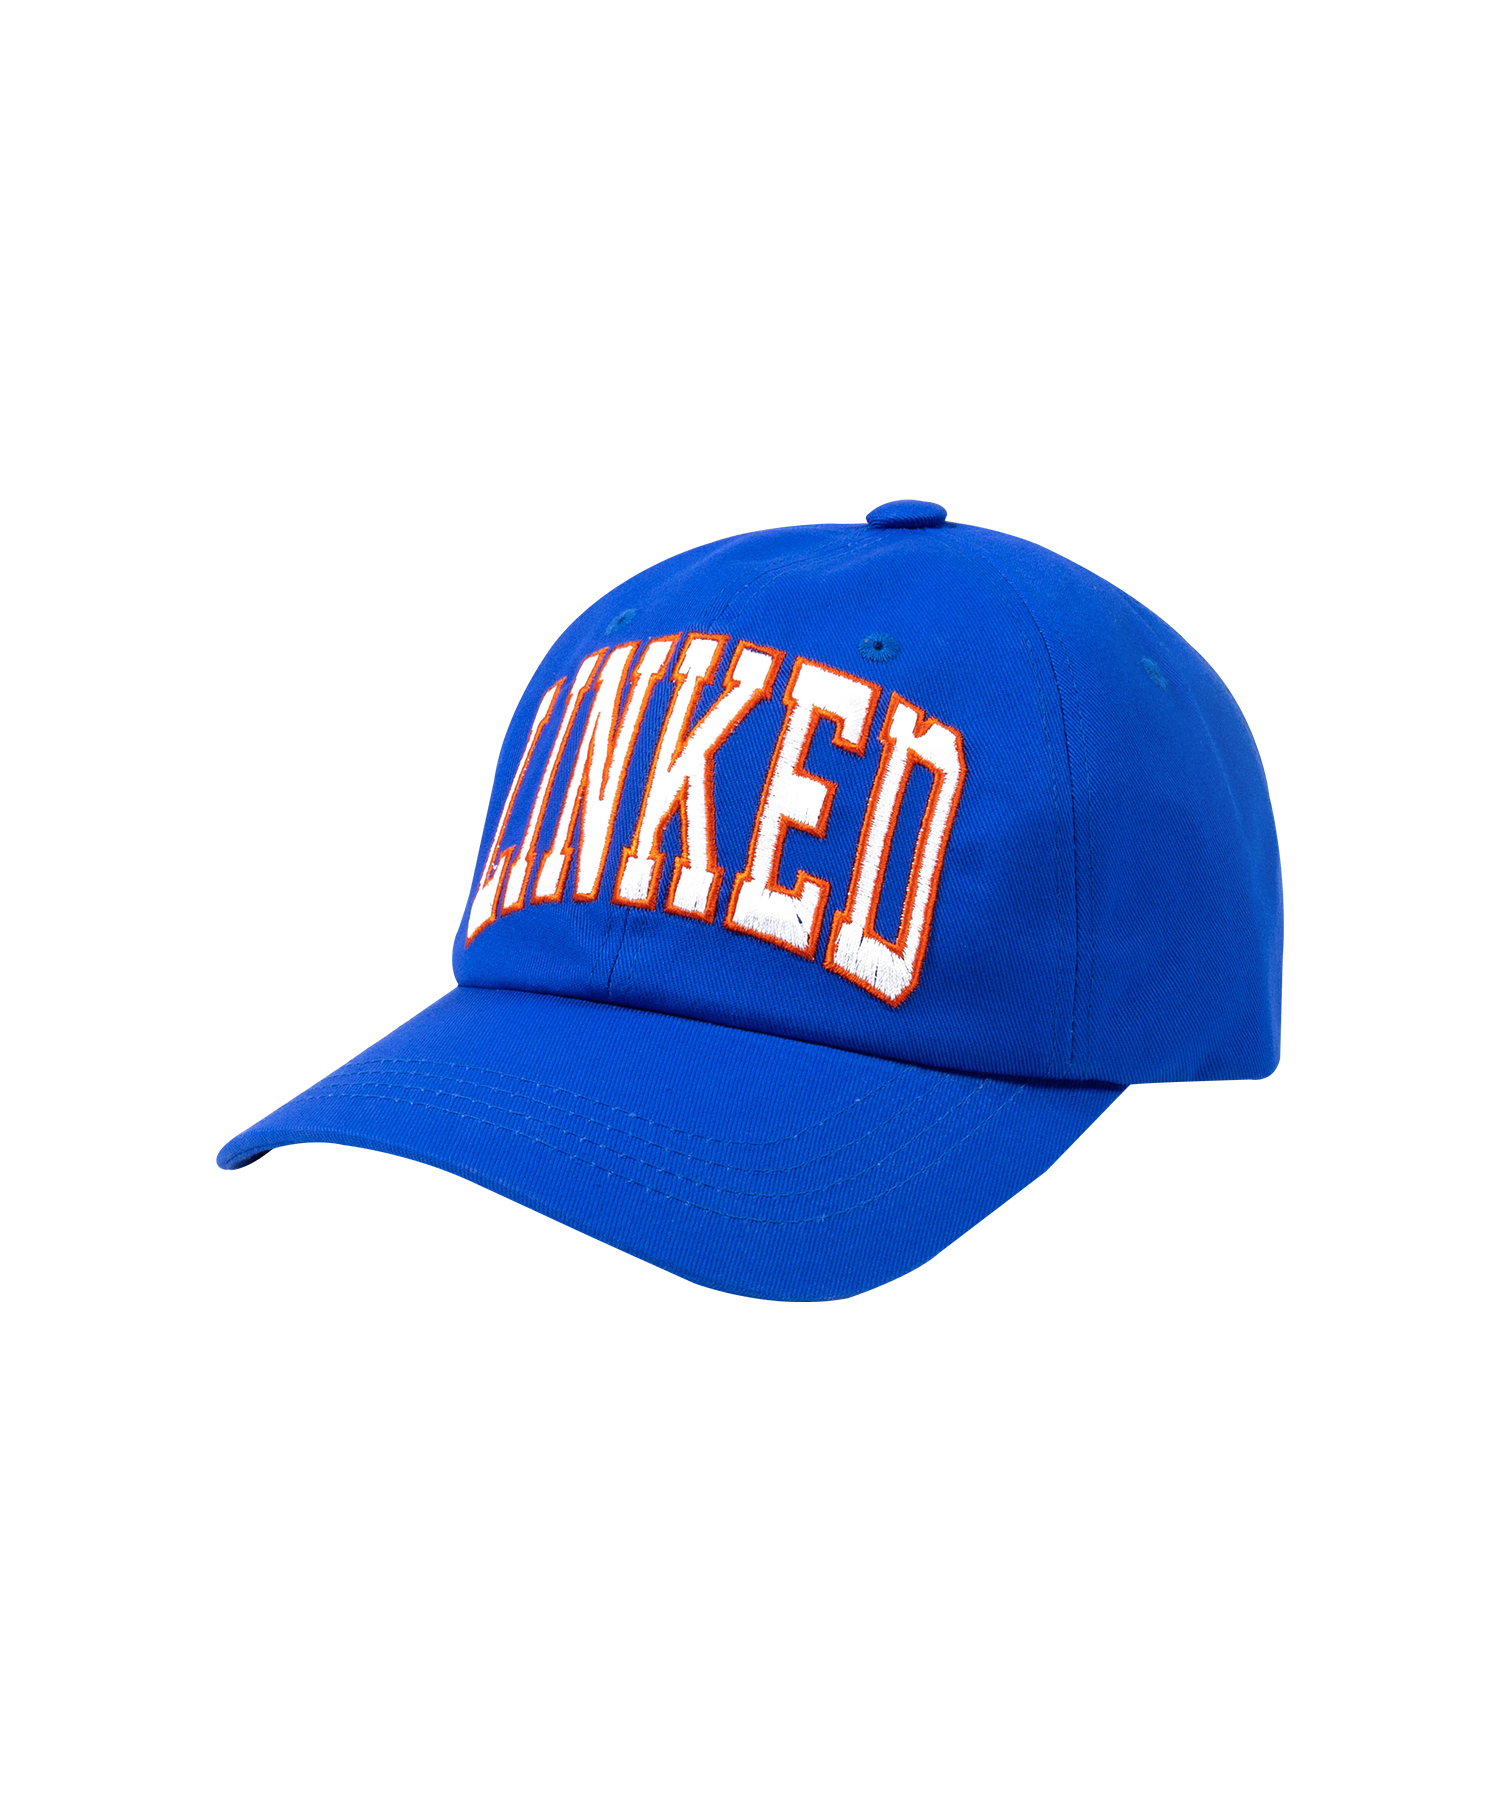 LINKED BALL CAP [BLUE]